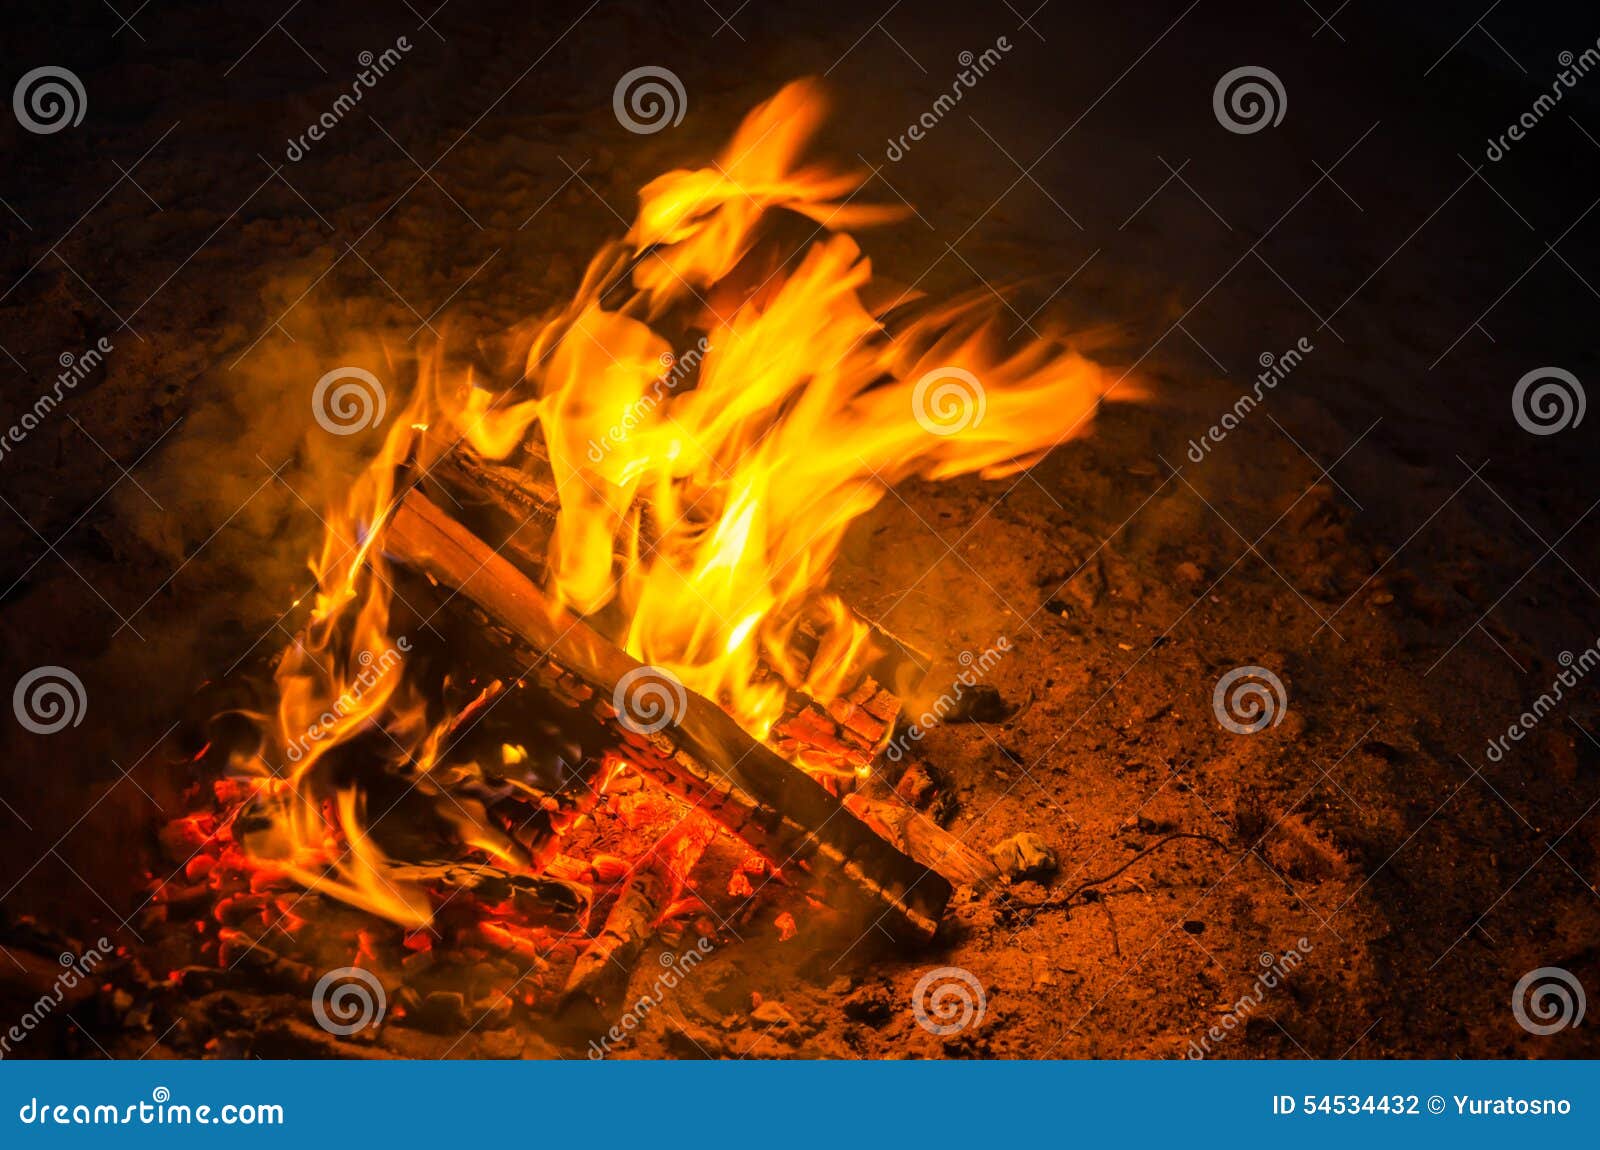 Bonfire on the beach sand stock photo. Image of burn - 54534432